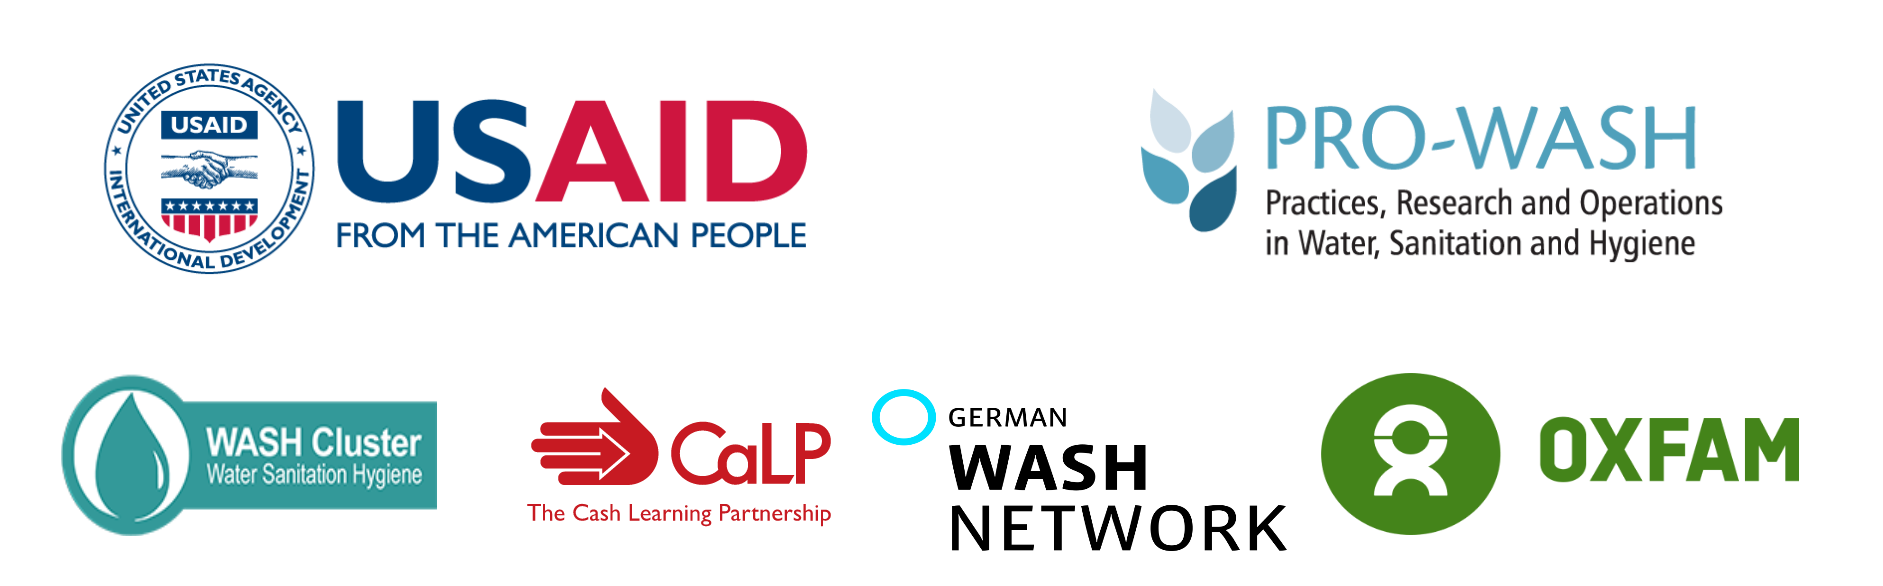 Logos USAID,PRO-WASH, WASH Cluster, CaLP, German Wash Network, OXFAM